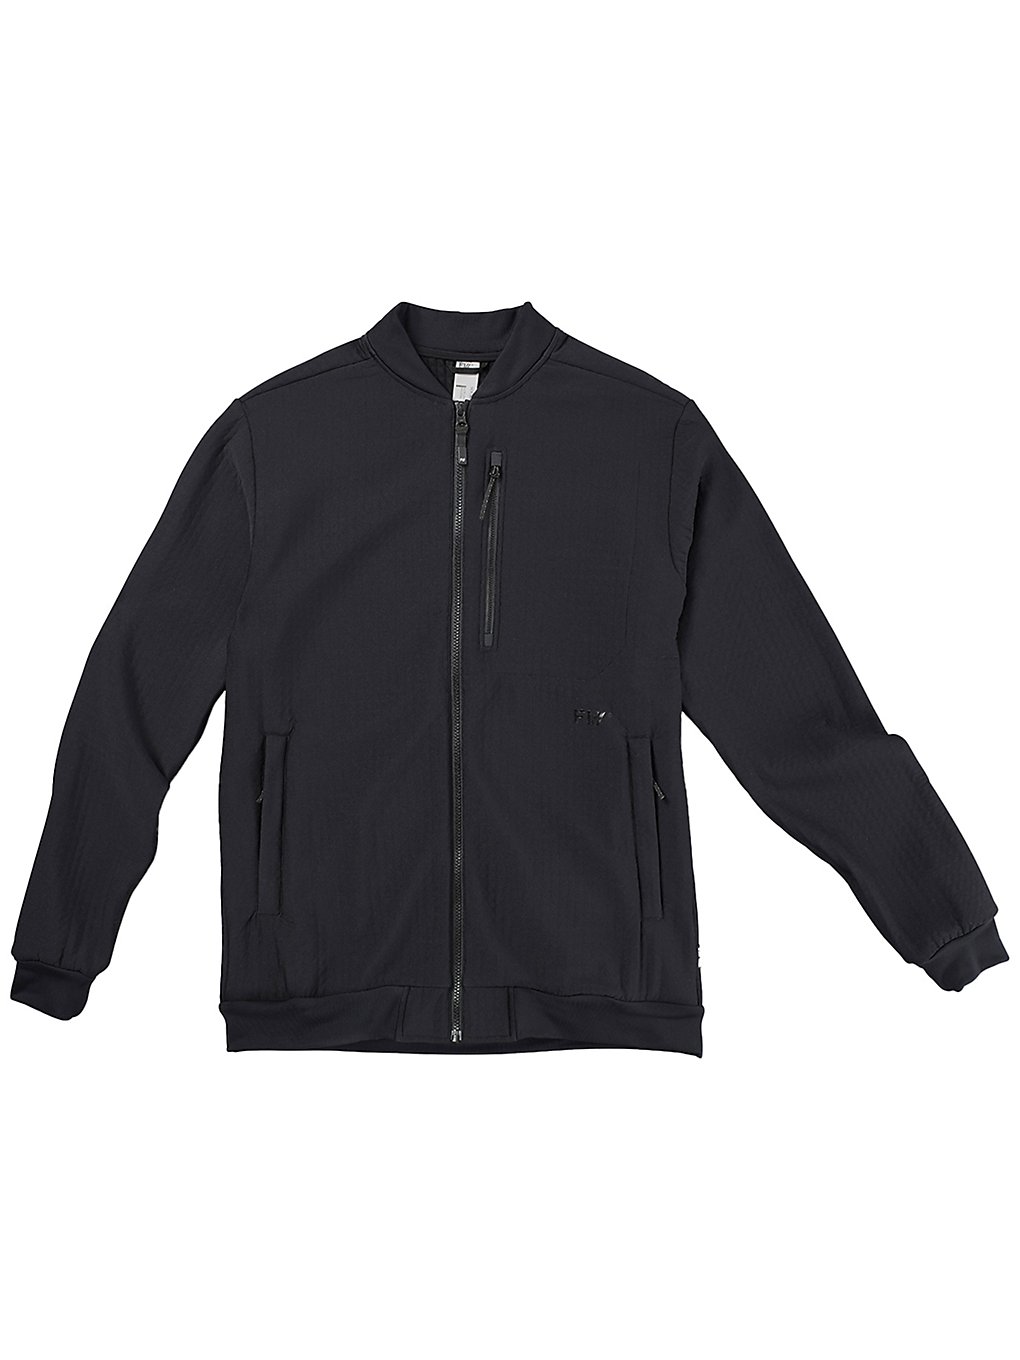 FW Source Powerair Fleece Jacket slate black